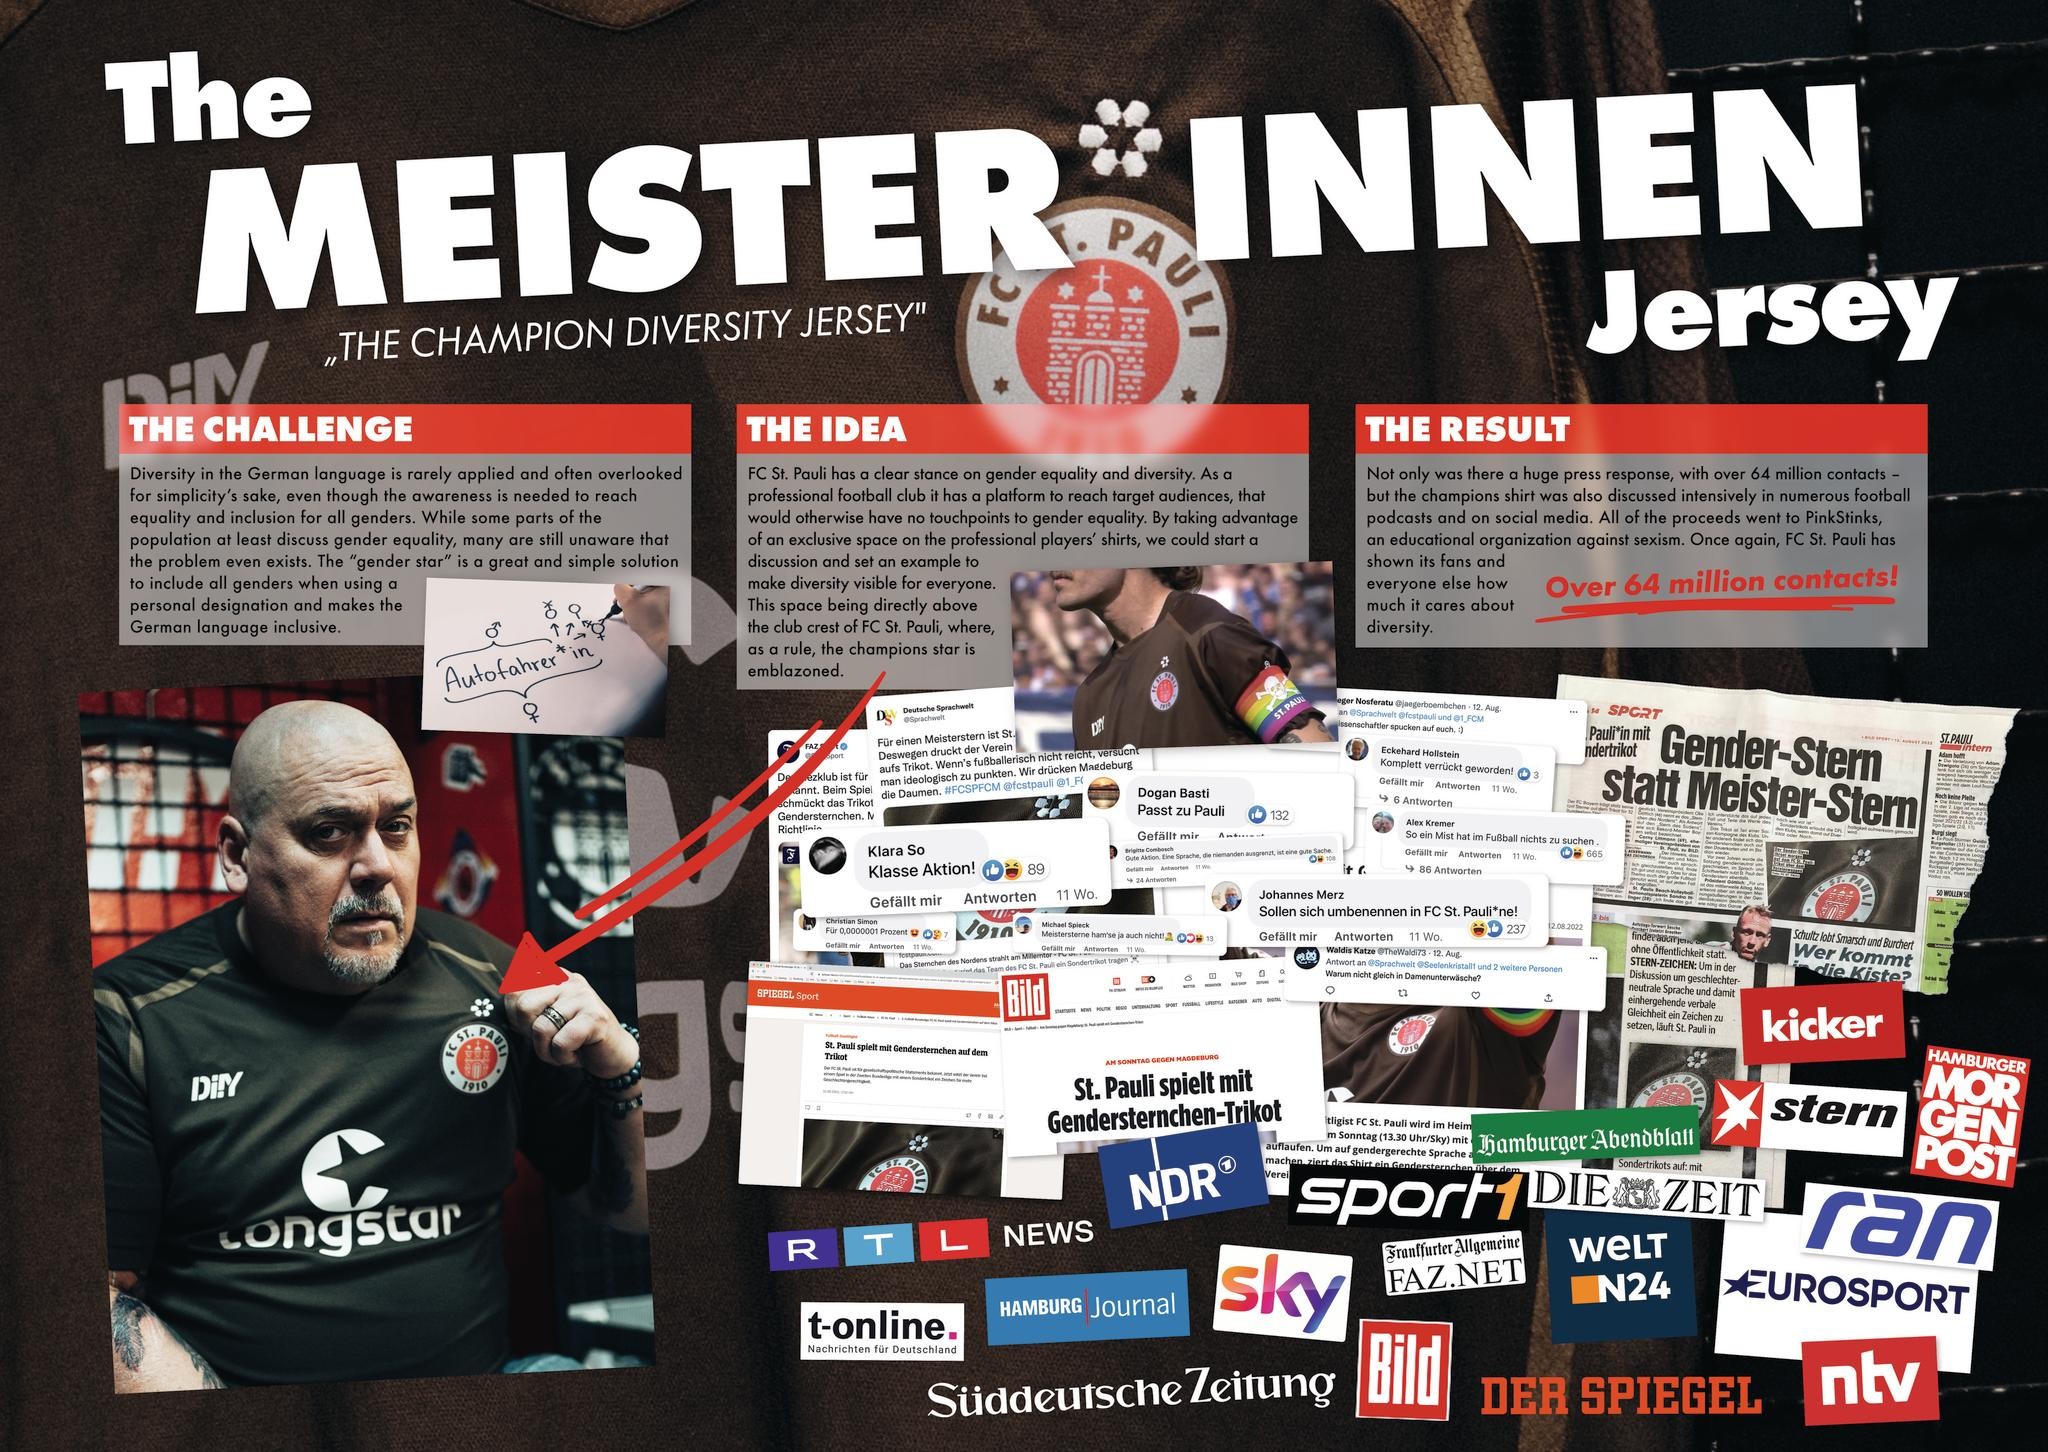 "The Meister*innen-Jersey"